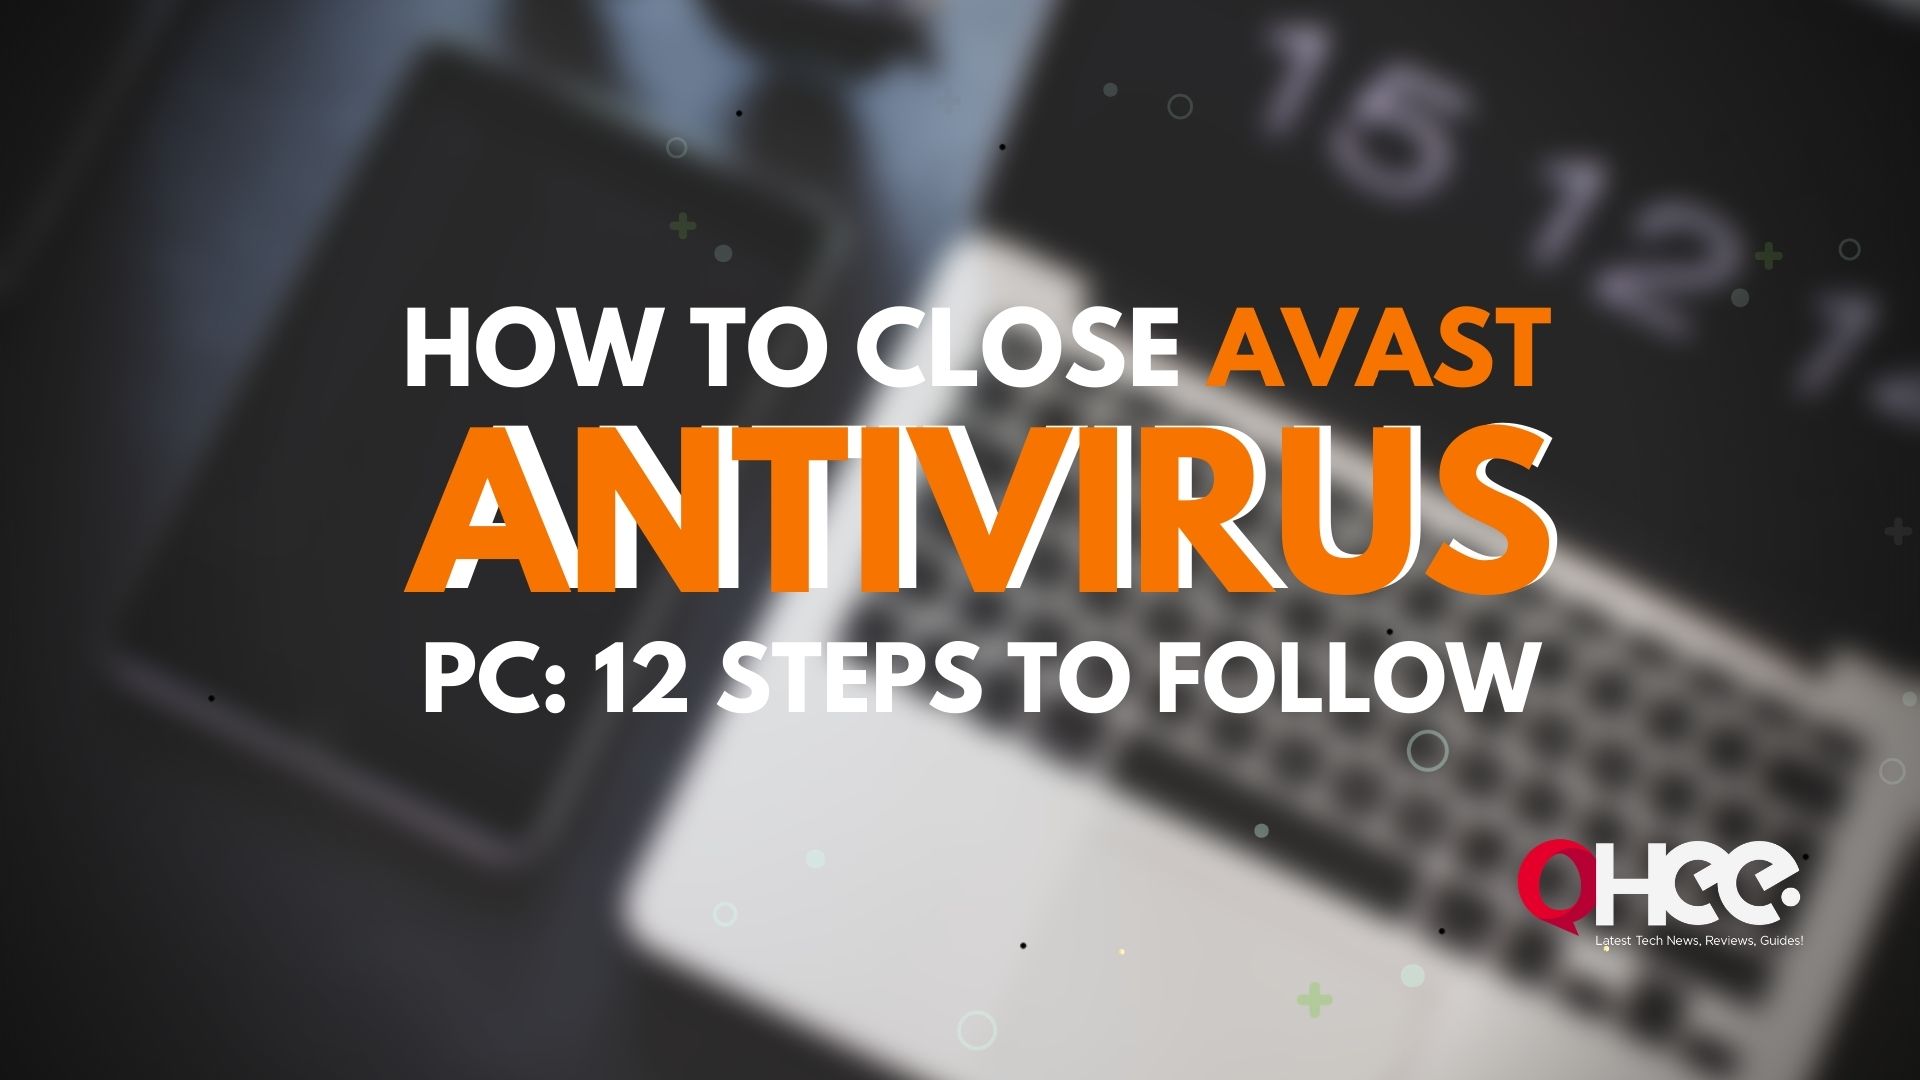 How to Close Avast Antivirus PC: 12 Steps To Follow